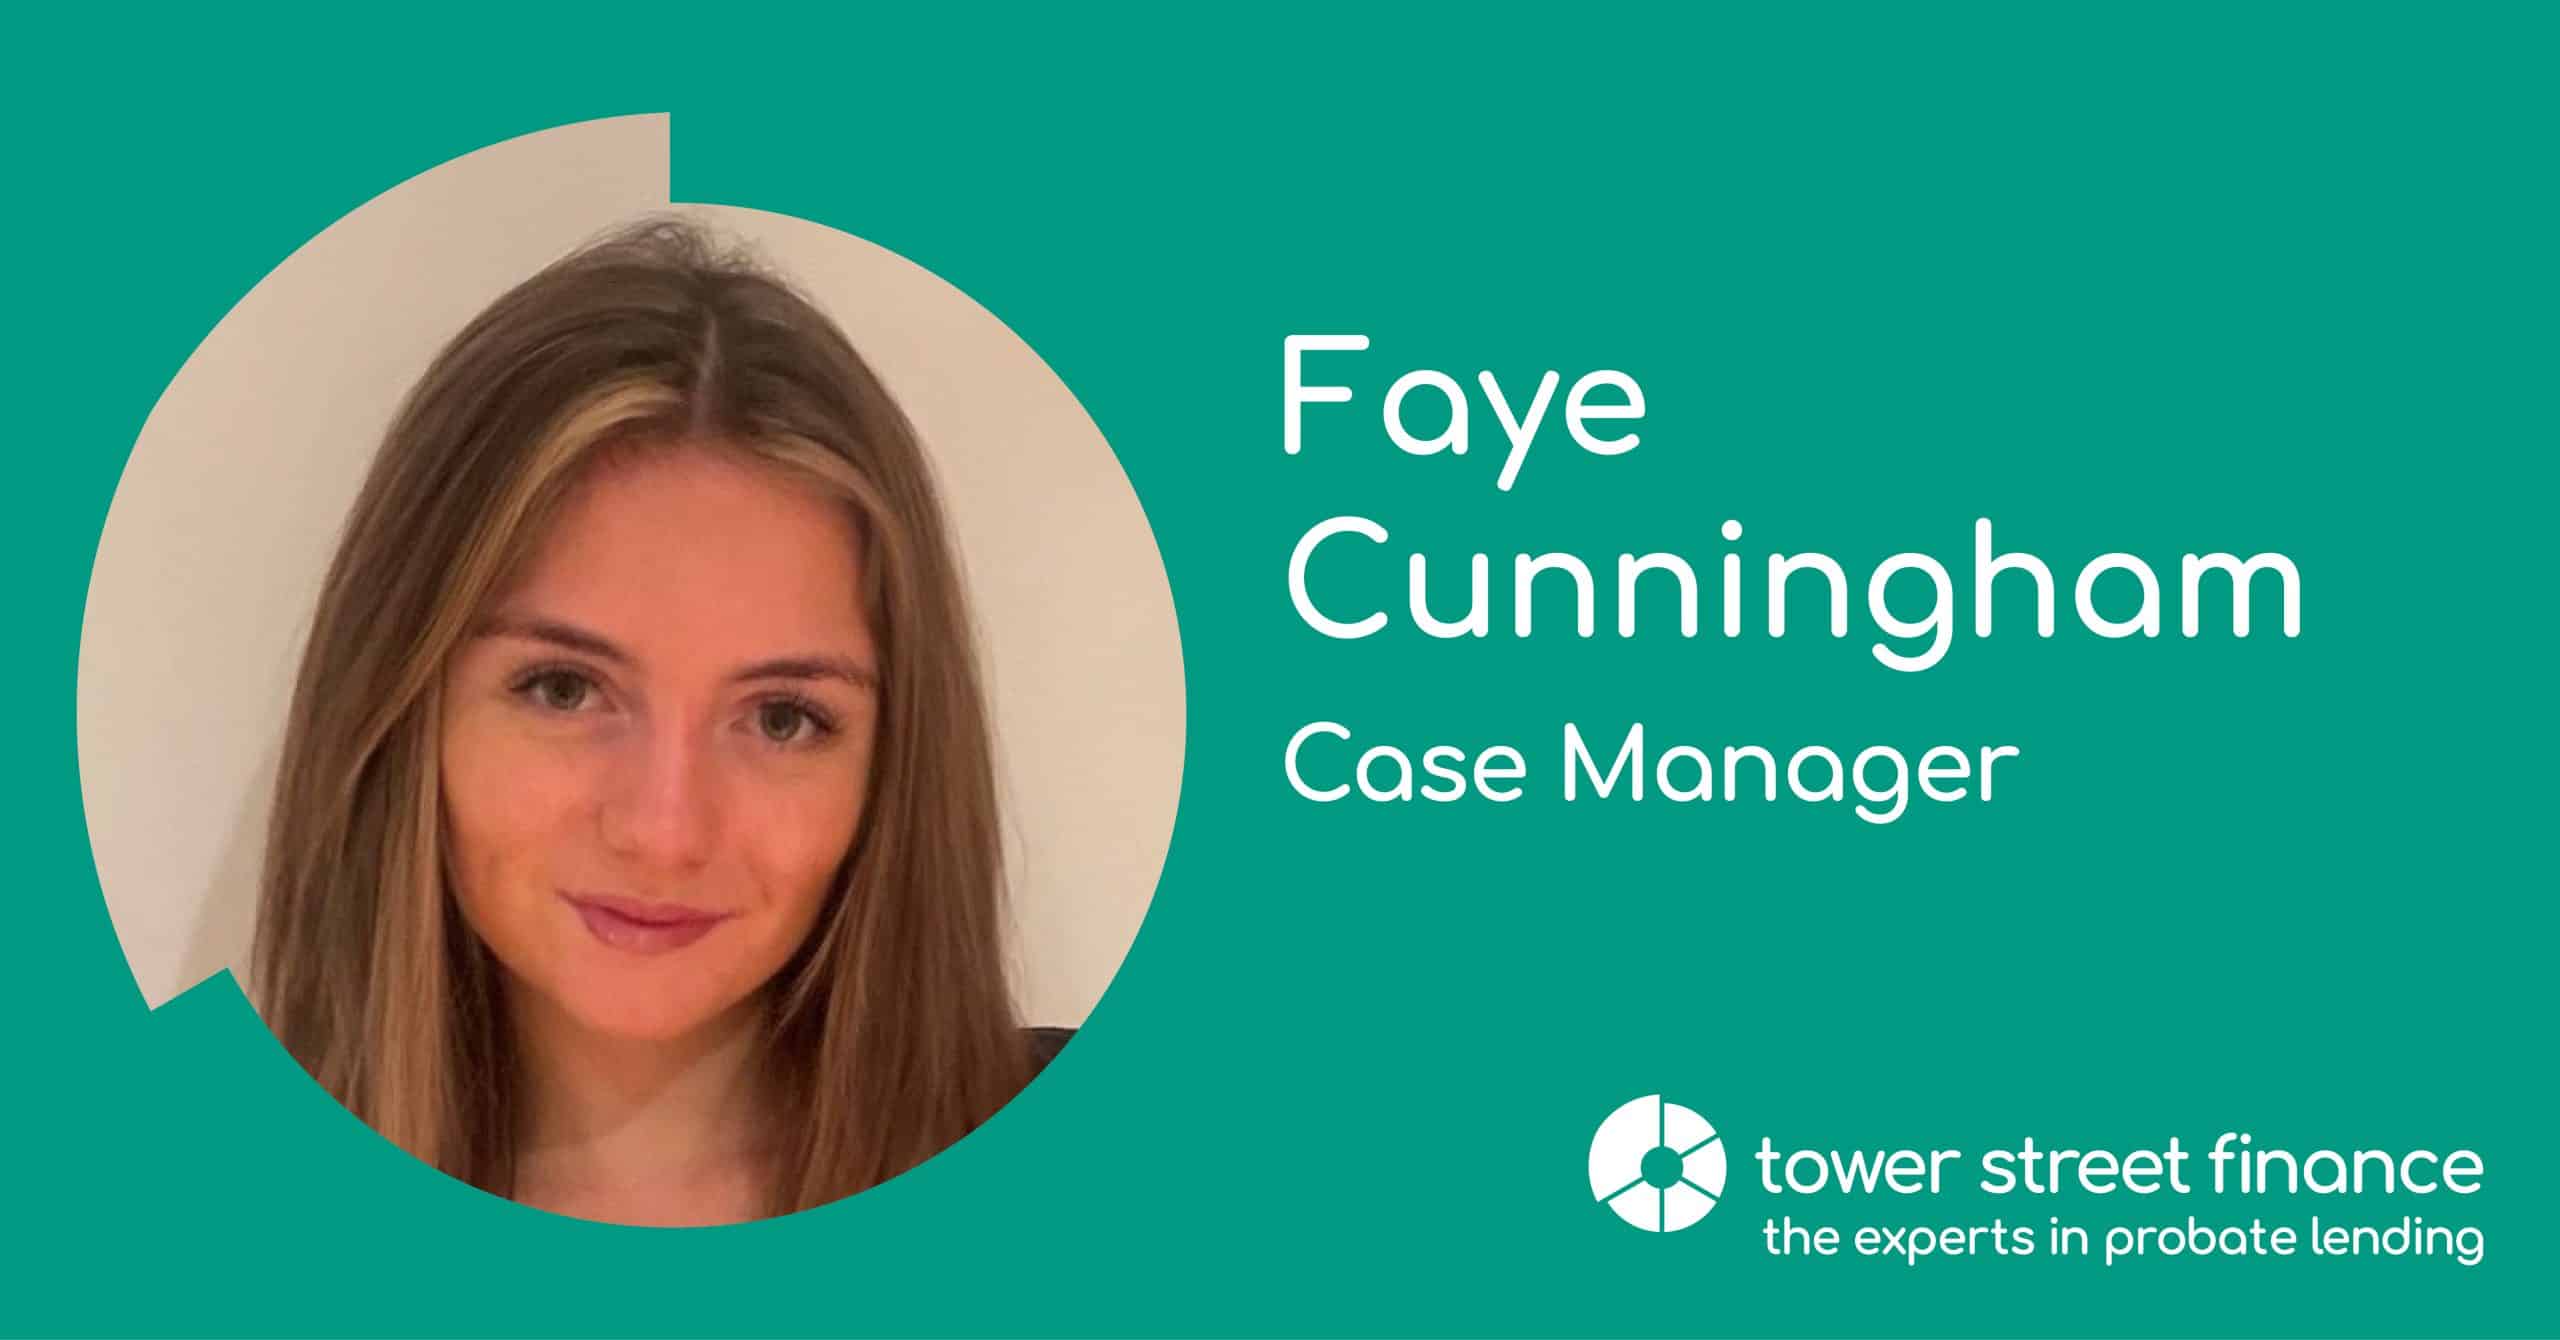 Faye joins Tower Street Finance